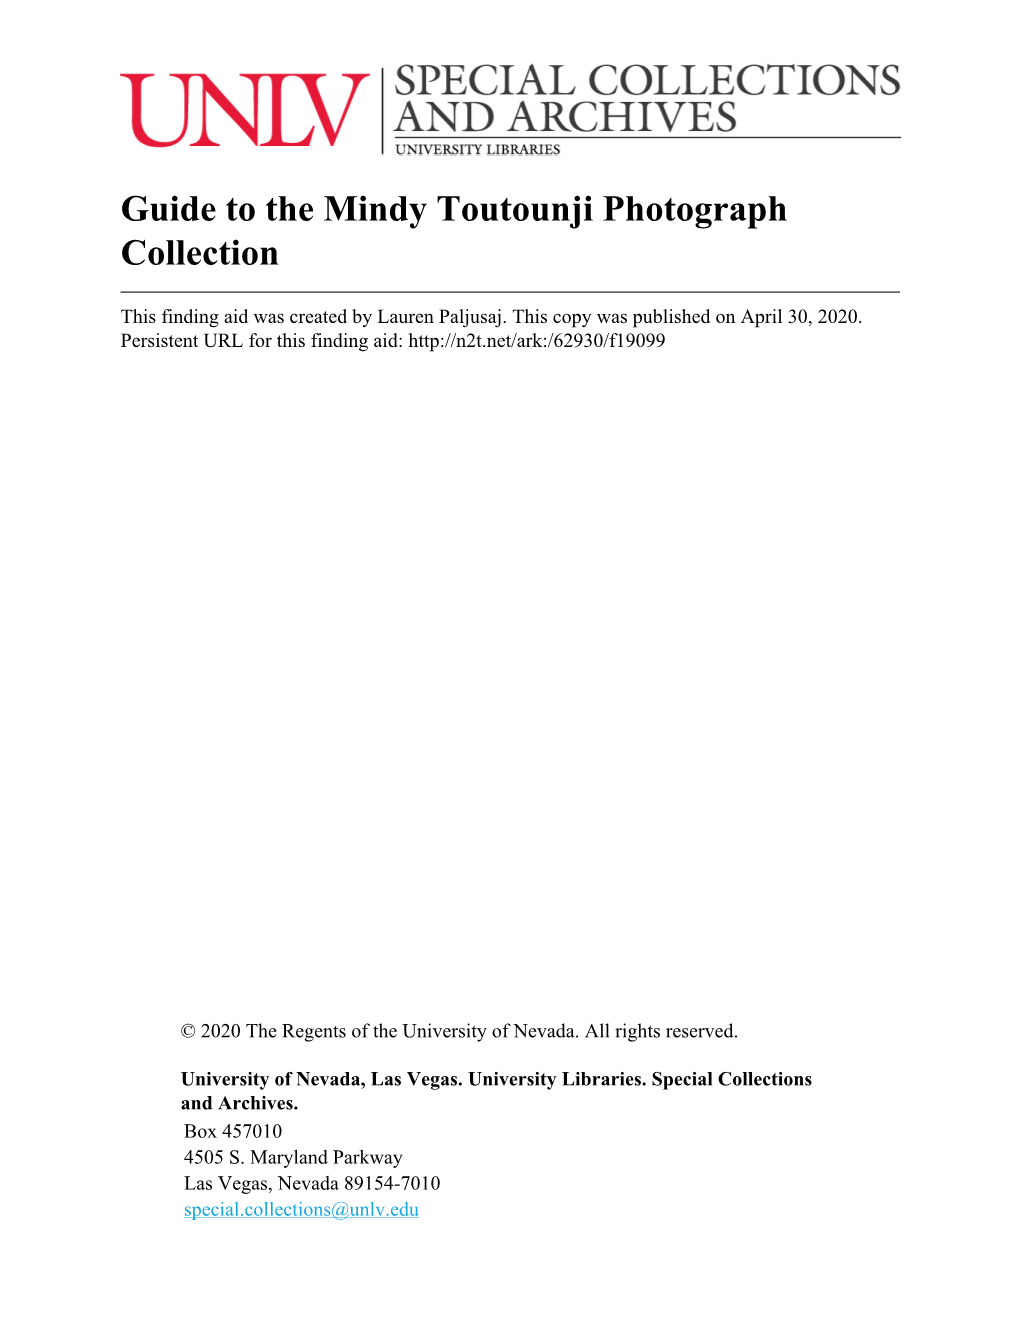 Guide to the Mindy Toutounji Photograph Collection